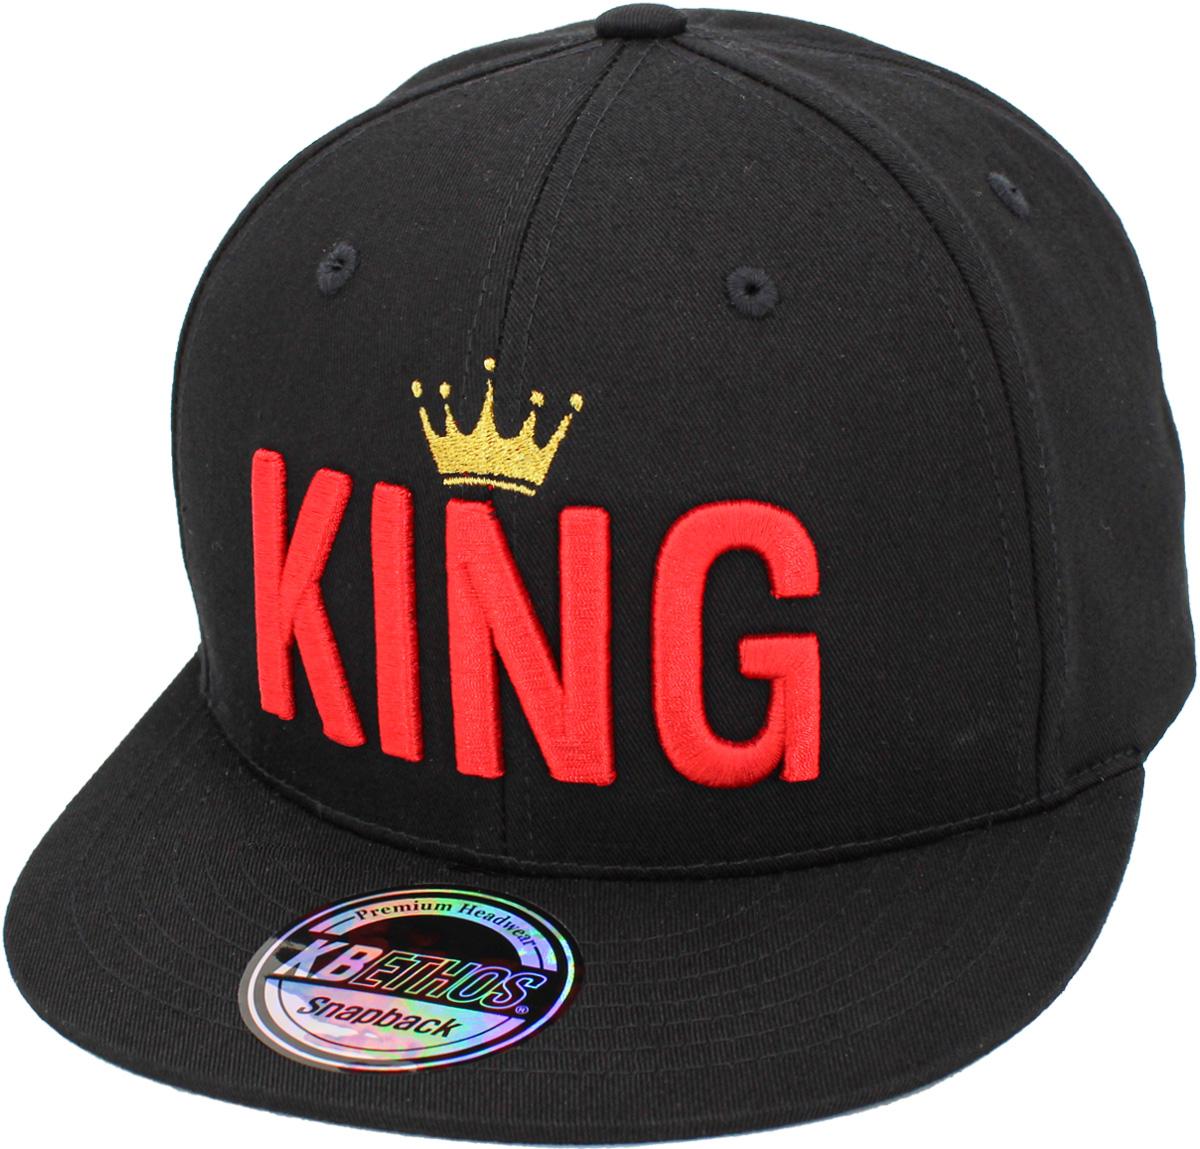 King SnapBack Hat - iNeedaHat.COM